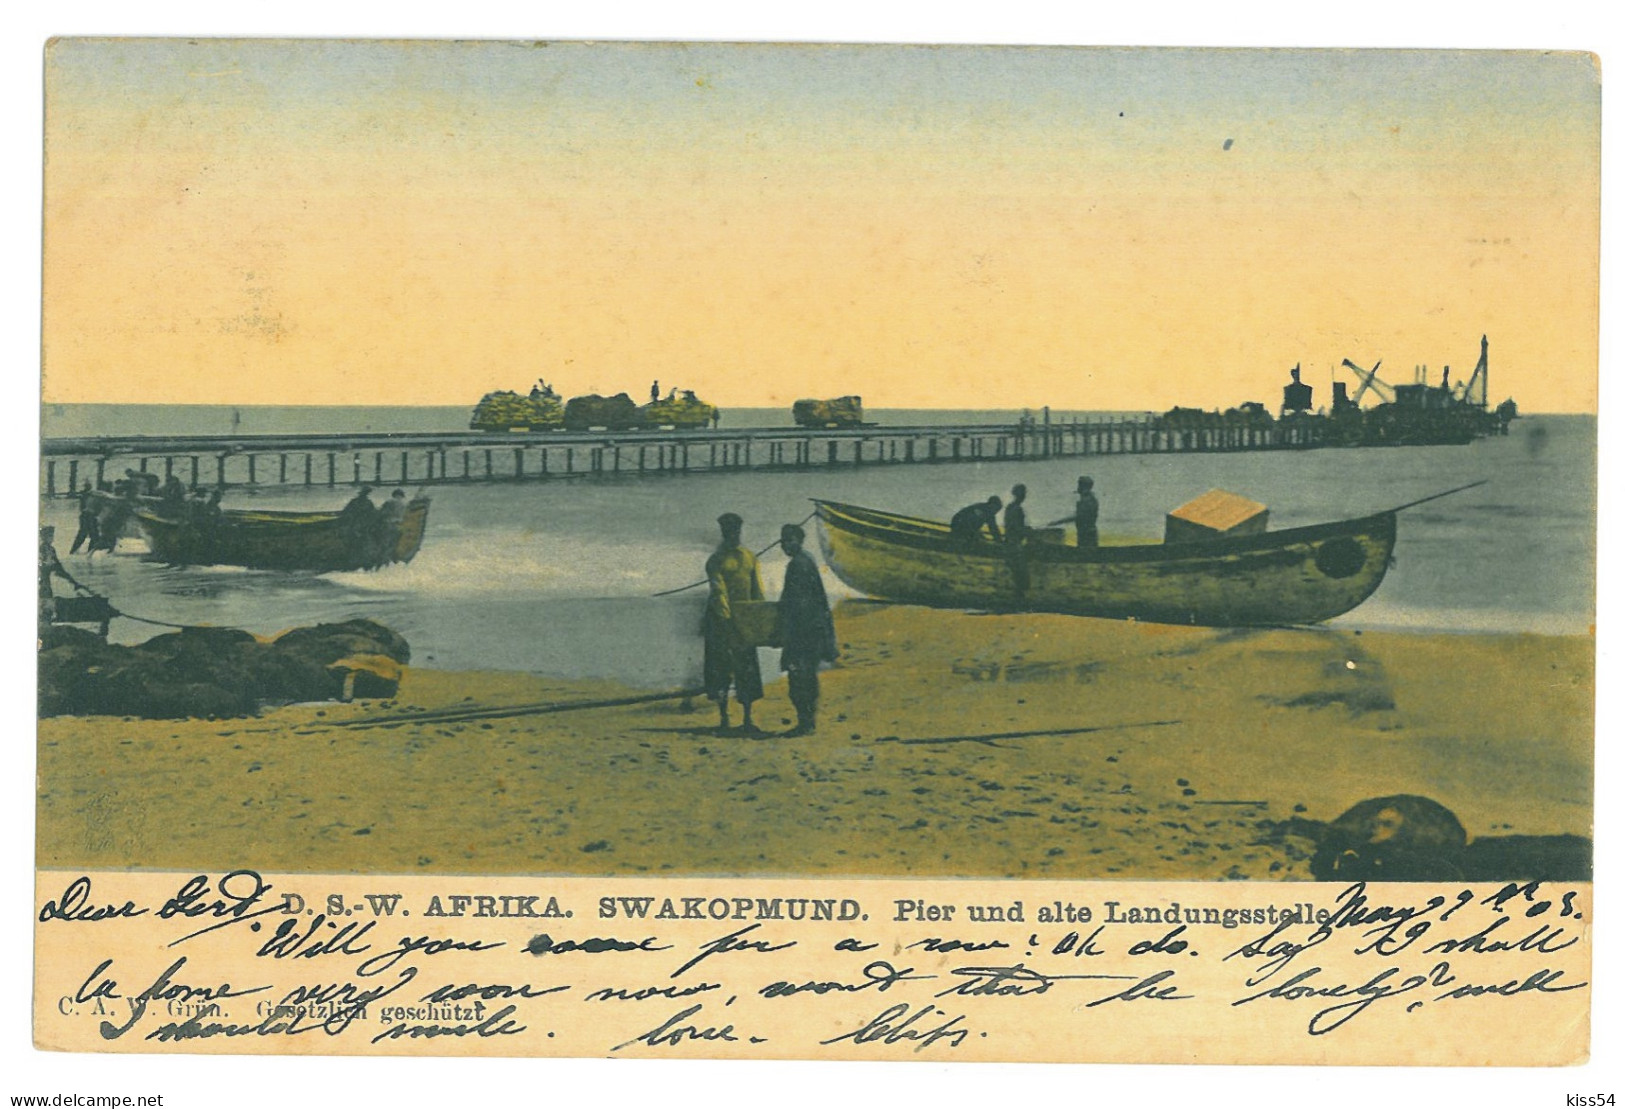 NAM 8 - 23800 SWAKOPMUND, Wharf, D.S.W. Afrika, Namibia - Old Postcard - Used - 1903 - Namibie